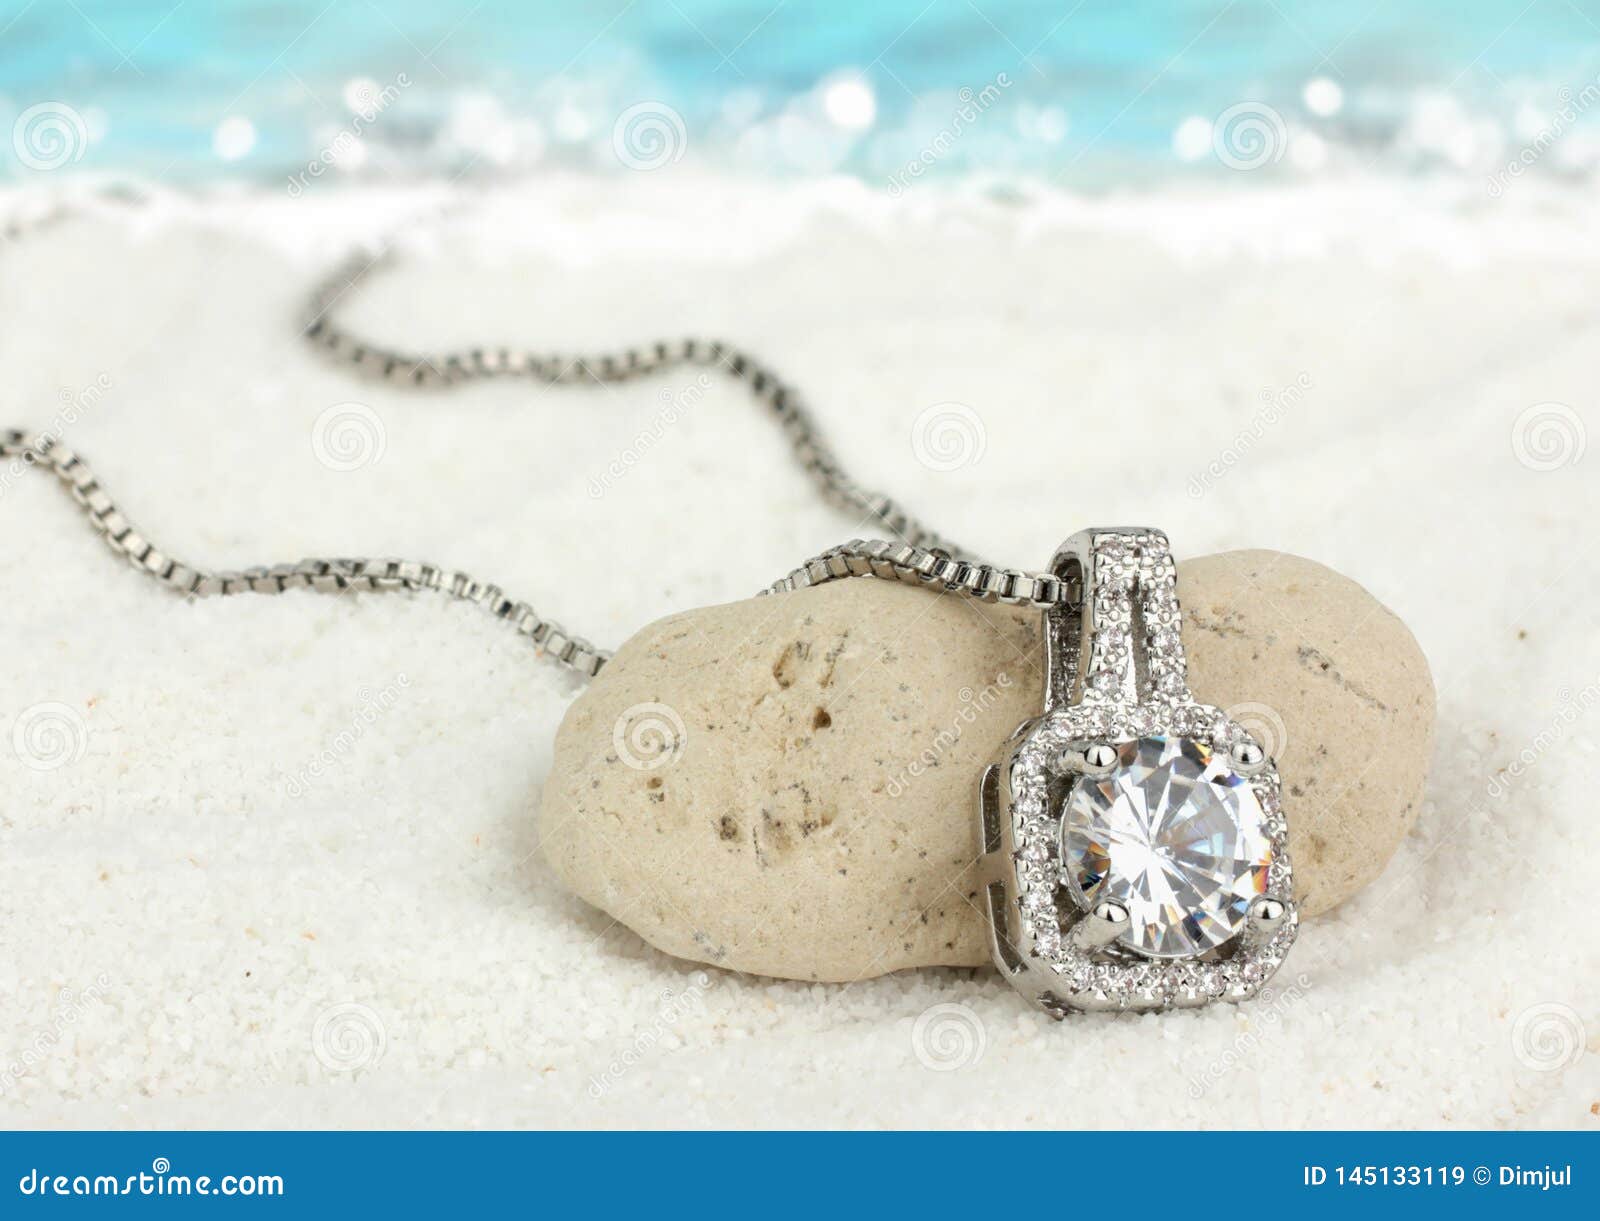 jewelry pendant with big diamond on sand beach as background